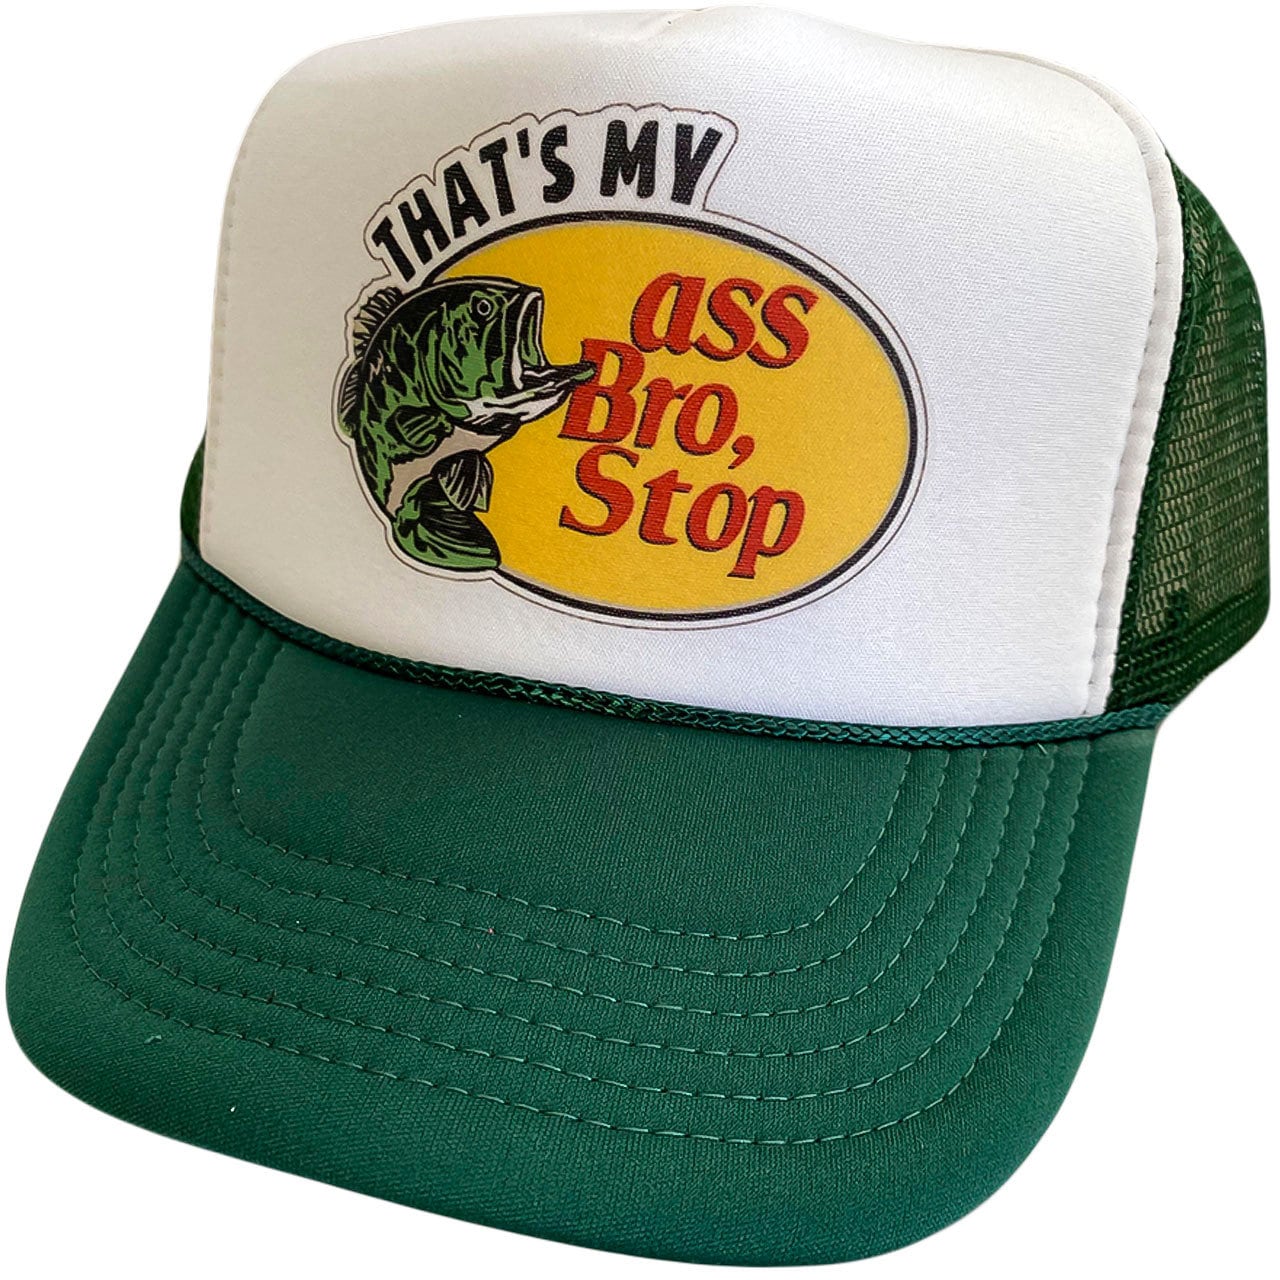 Hats for Men Fishing Mesh Cap Women Trucker Hats Snapback Thats My Ass Bro  Stop Fashion Mesh Hats Apricot at  Men's Clothing store